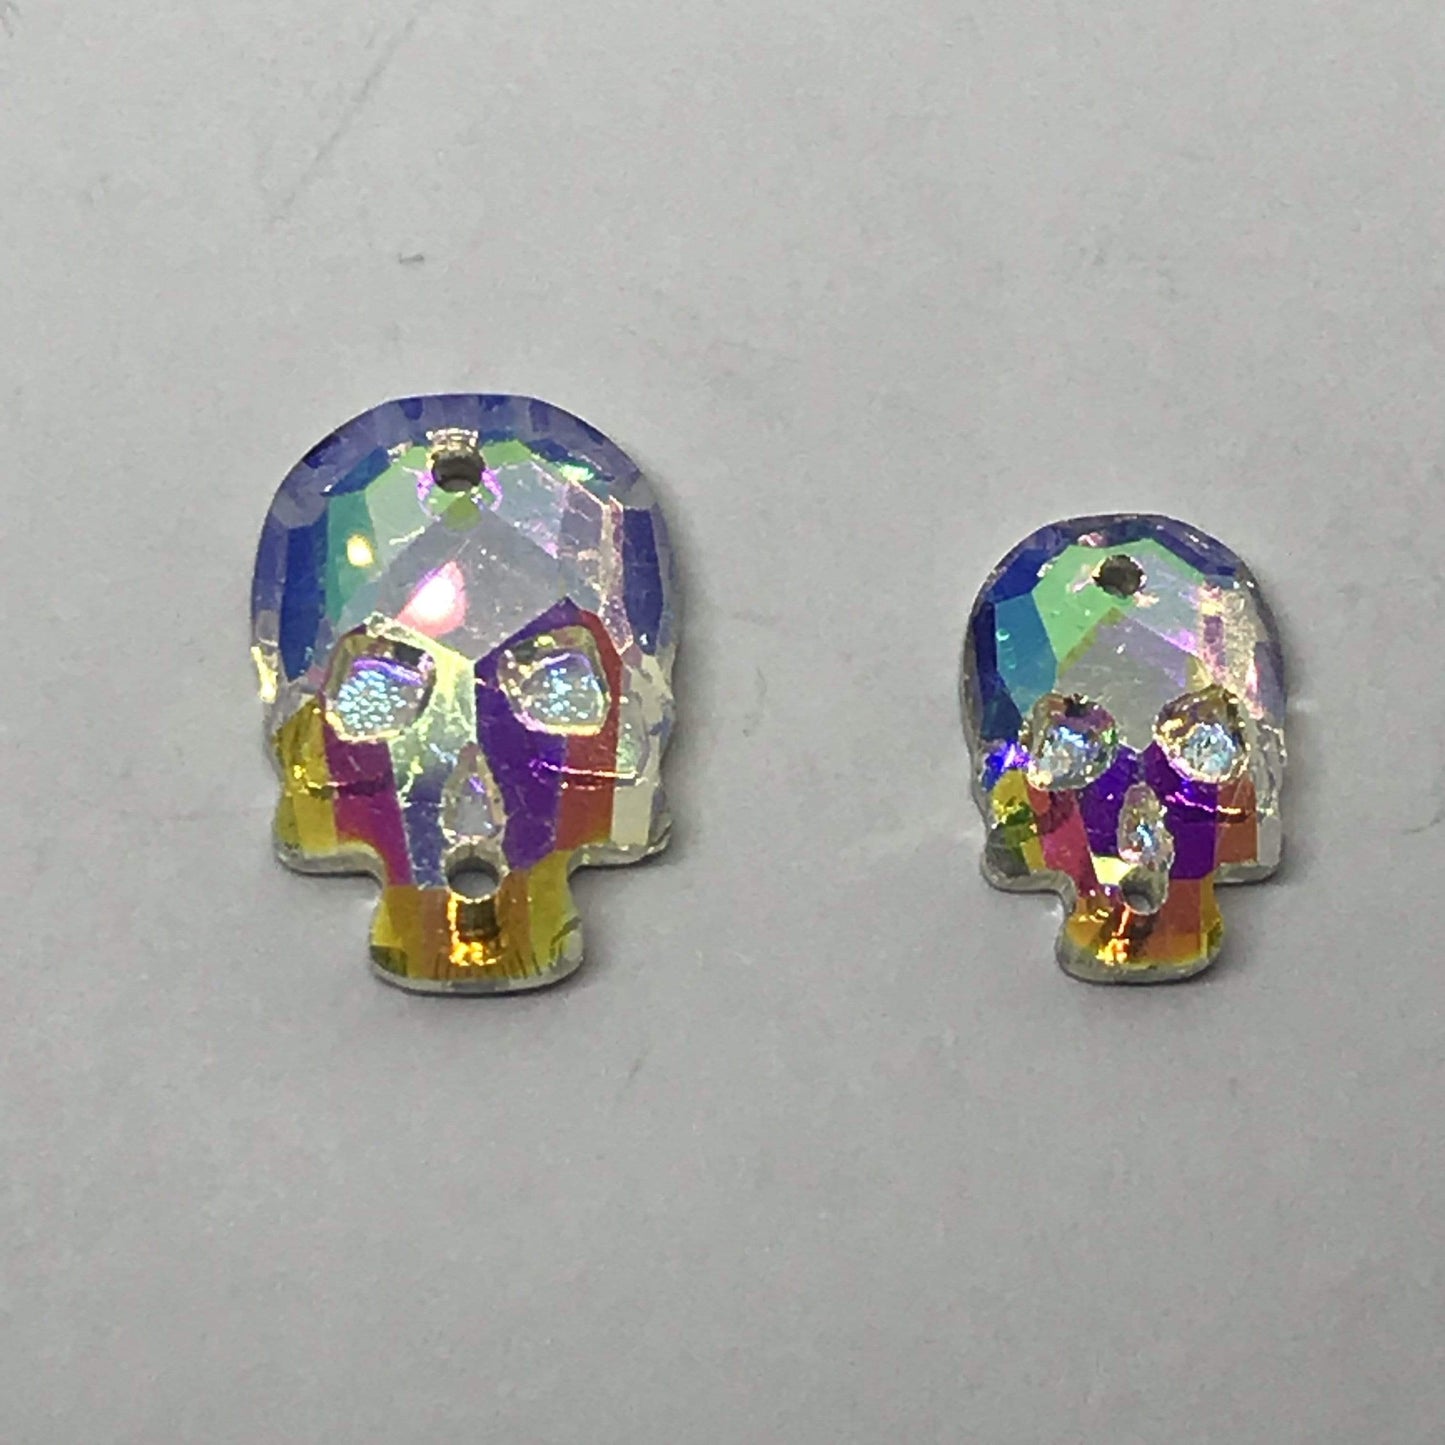 Sundaylace Creations & Bling Fancy Glass Gems AB Skull / 14mm Skull Shaped Glass Gem, Flatback, Sew on Gem, in multiple colours